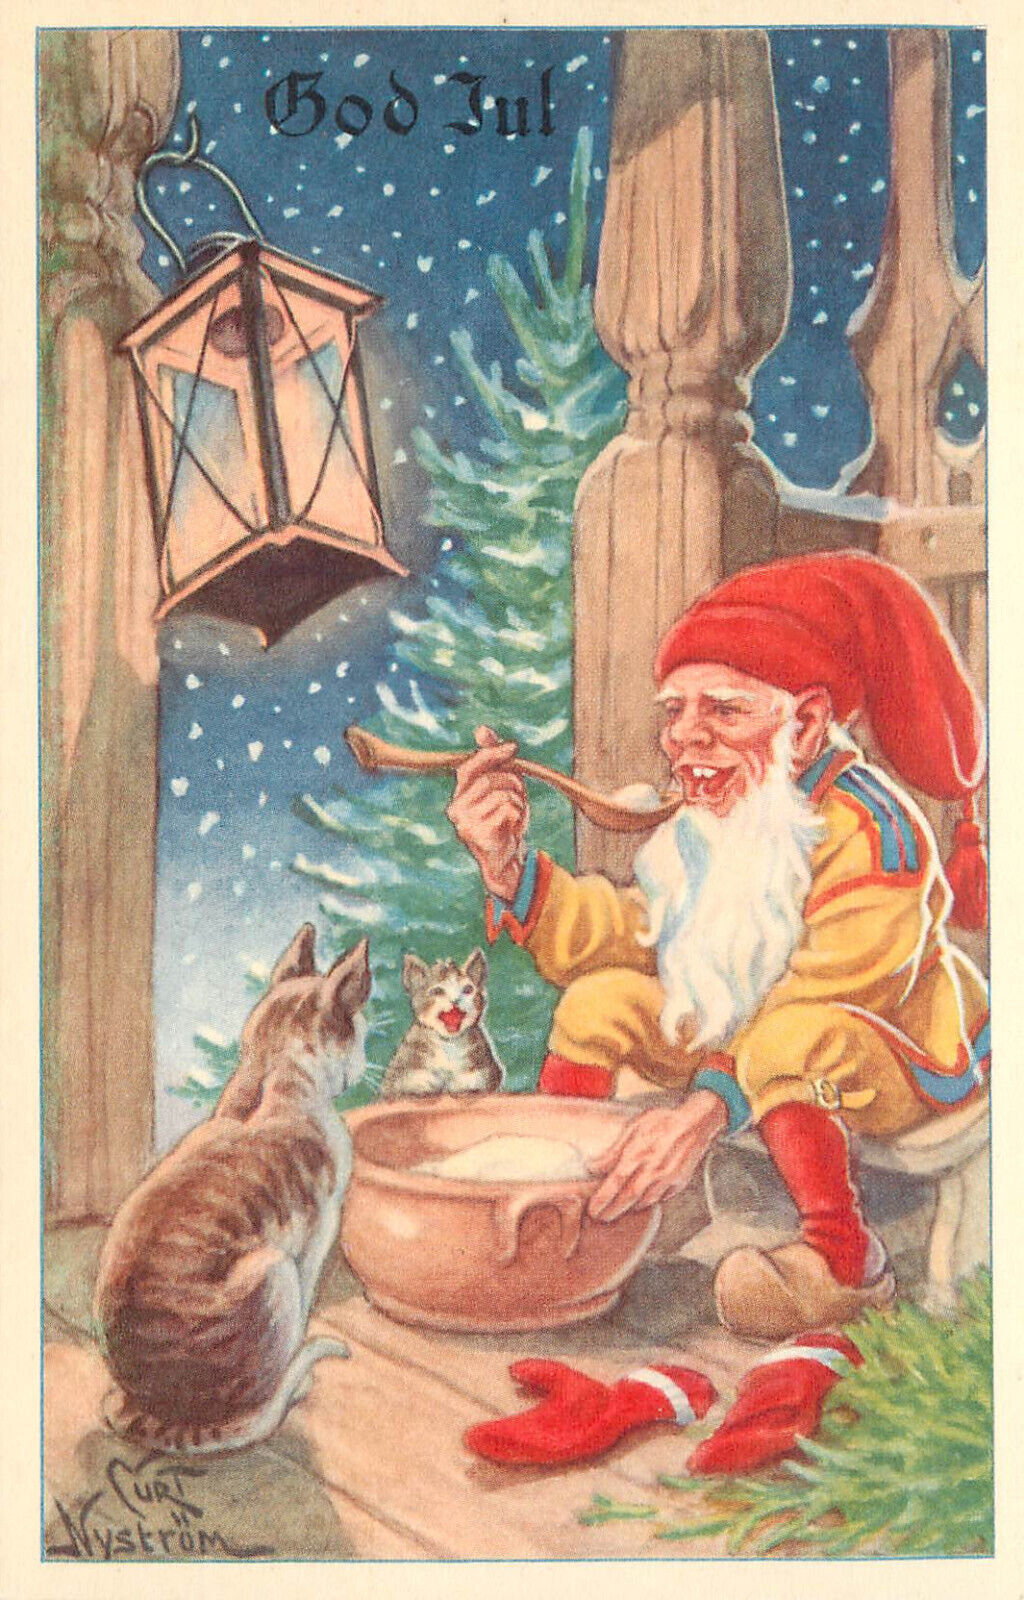 God Yul Swedish Christmas Postcard Curt Nystrom Tomte Gnome & Cats Eat Porridge